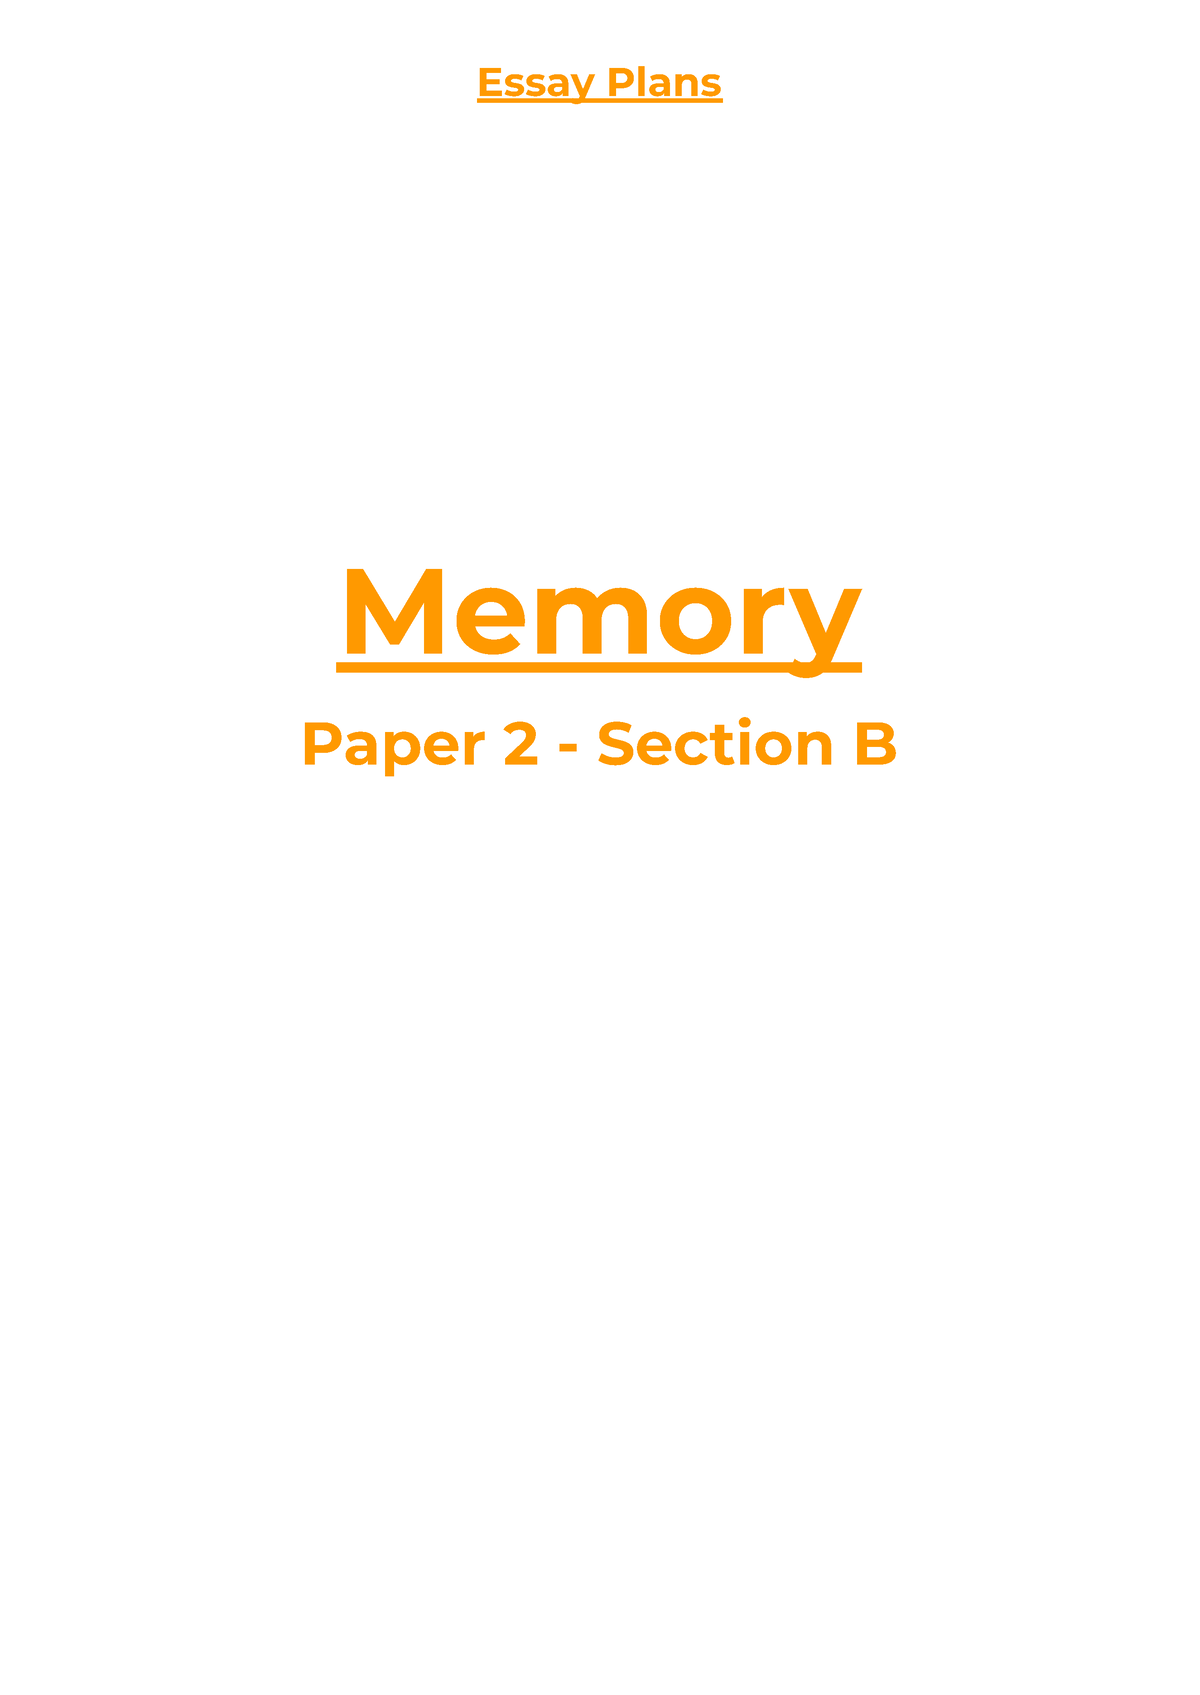 memory essay plans